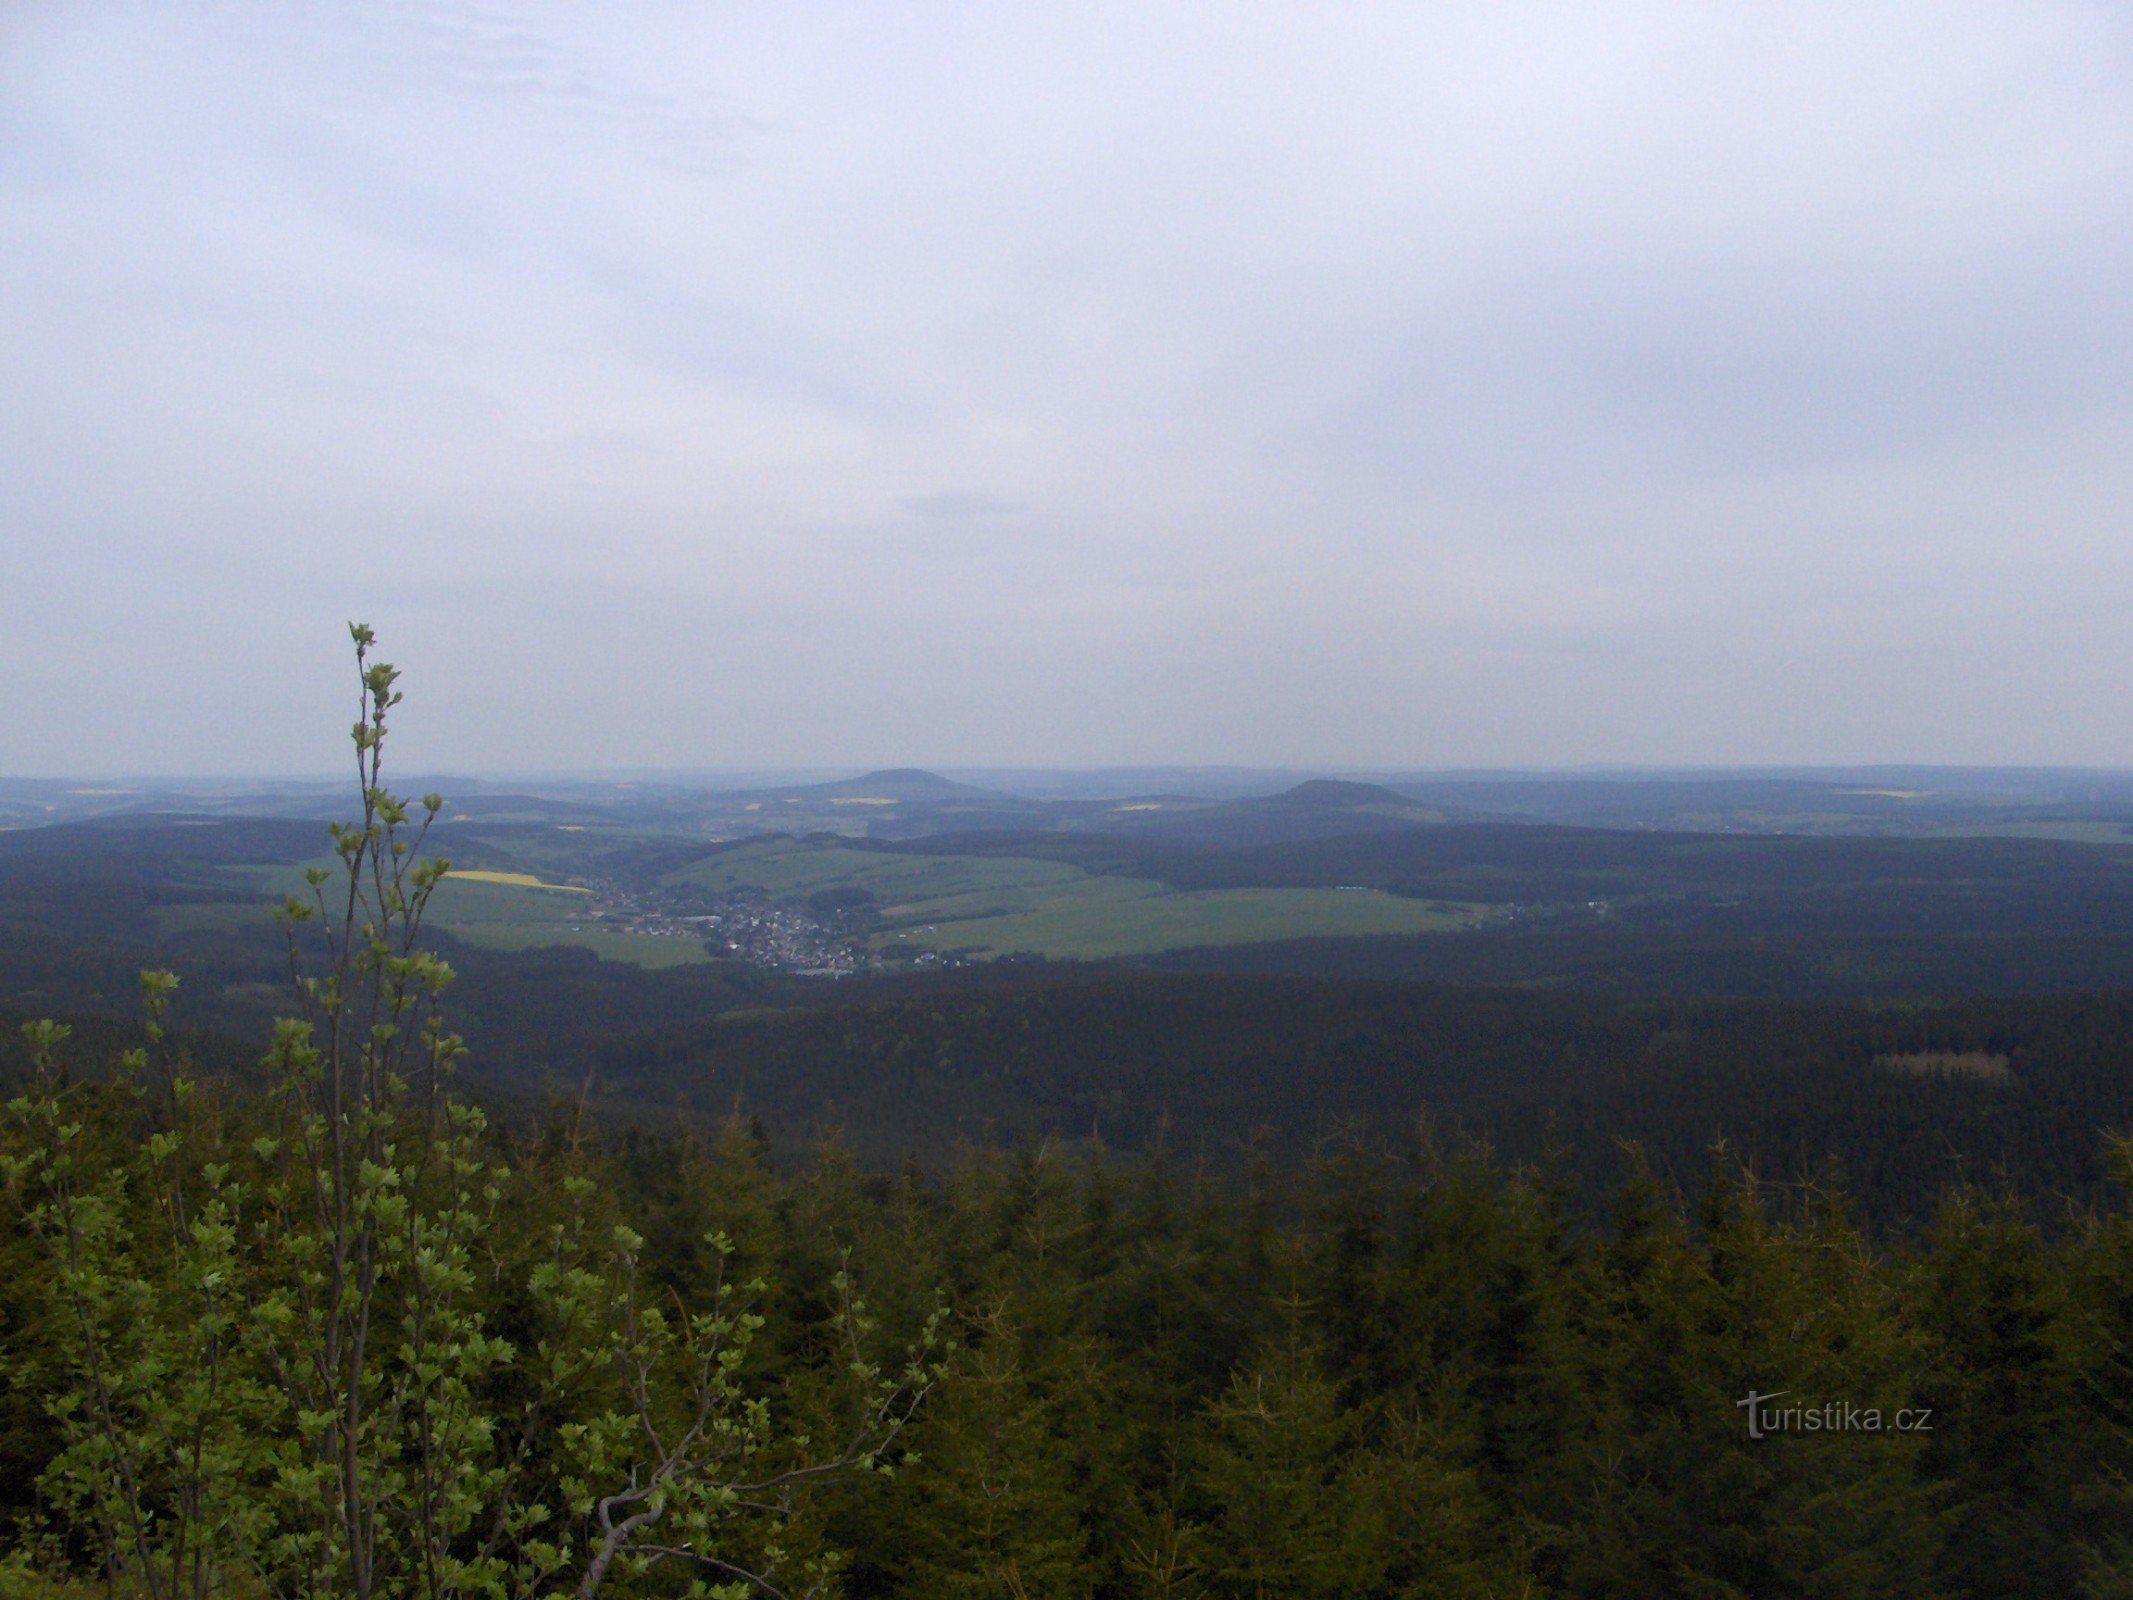 widok ze skalnego punktu widokowego w kierunku Bärenstein